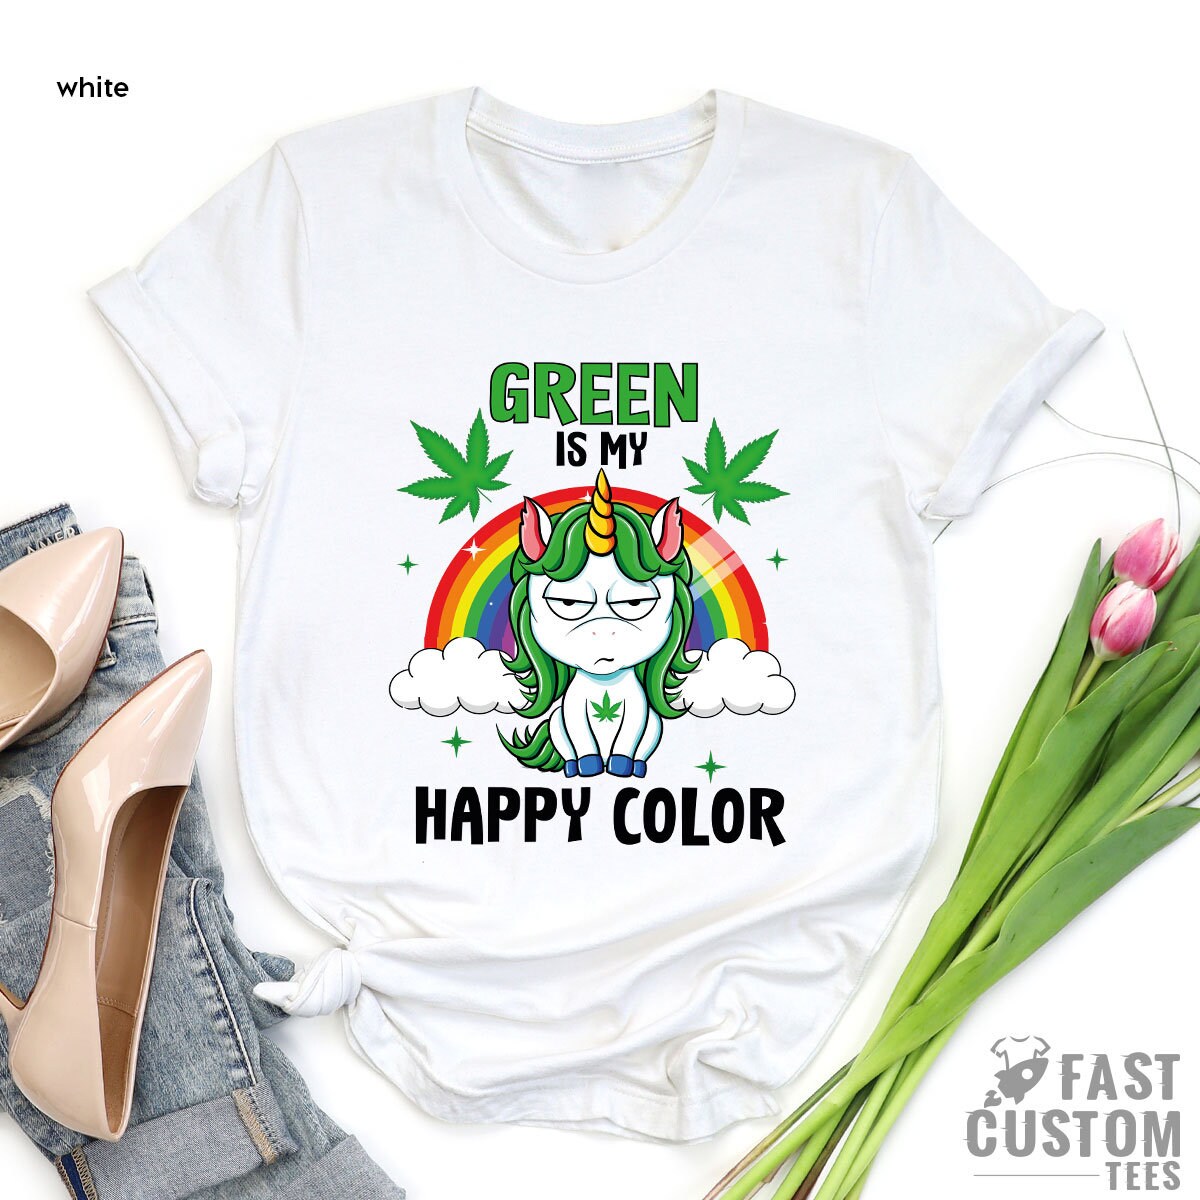 Weed Shirt, Cannabis Shirt, Green Is My Happy Color Shirt, Marijuana T-Shirt, Unicorn Shirt, Rainbow Shirt, Gift For Weed Lover, Pothead Tee - Fastdeliverytees.com